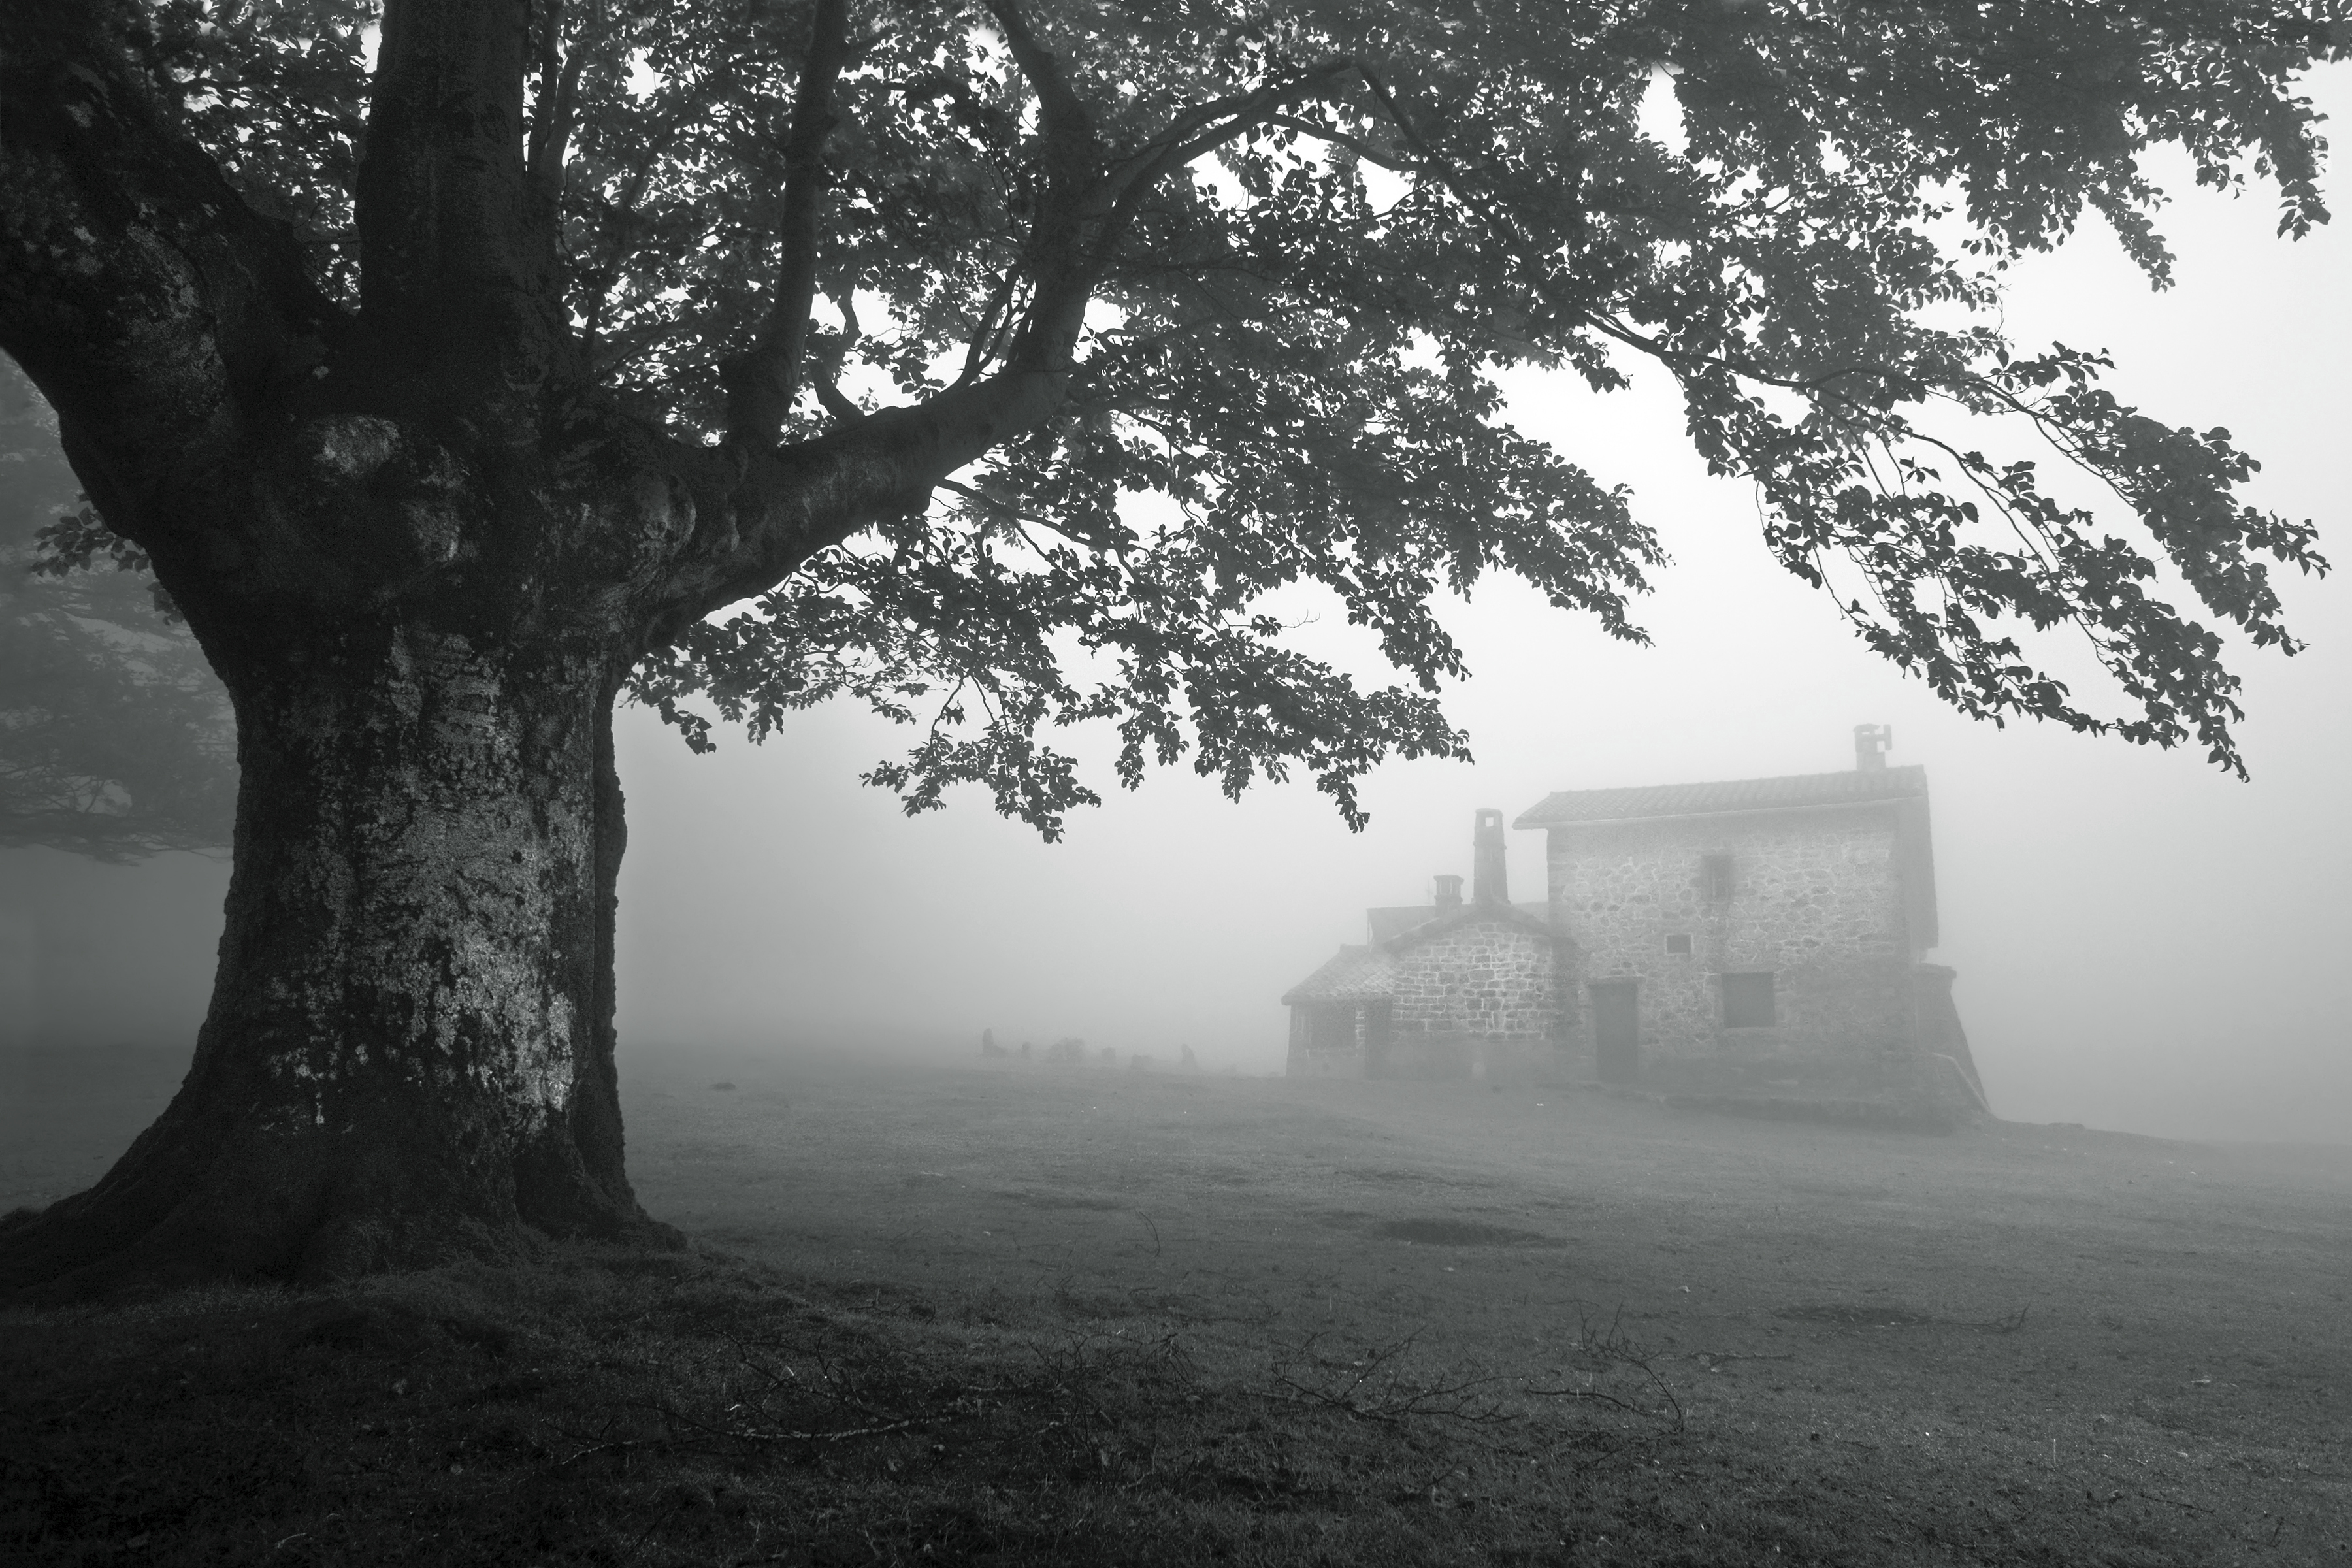 haunted-house-fog-tree